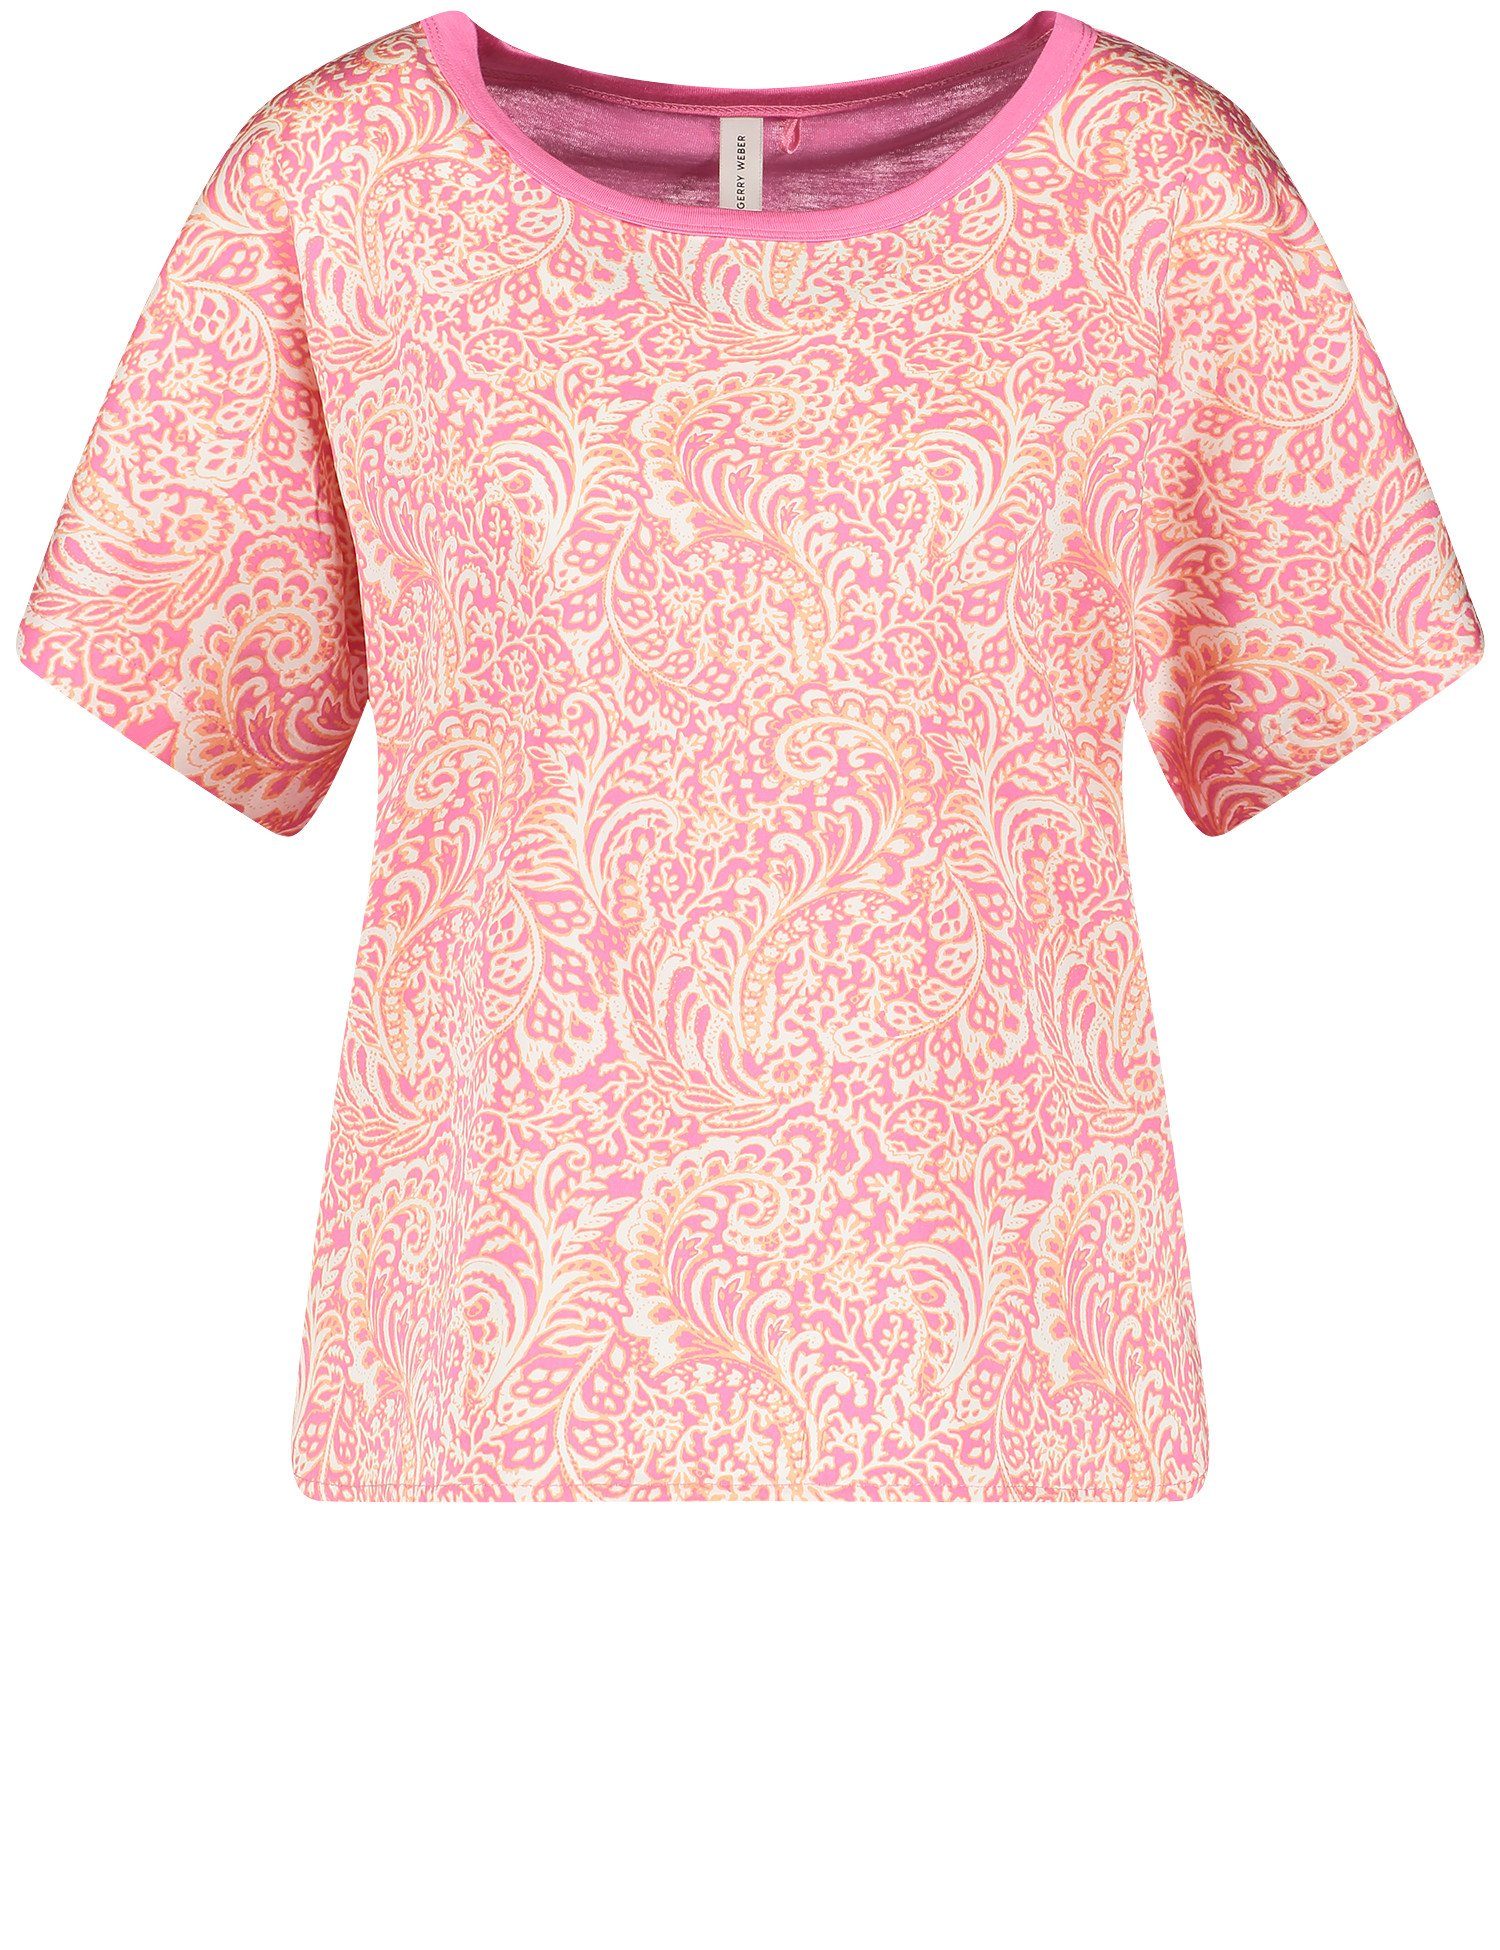 GERRY WEBER Druck Seitenschlitzen Kurzarmshirt Kurzarmshirt Lila/Pink/Rot/Orange mit Gemustertes